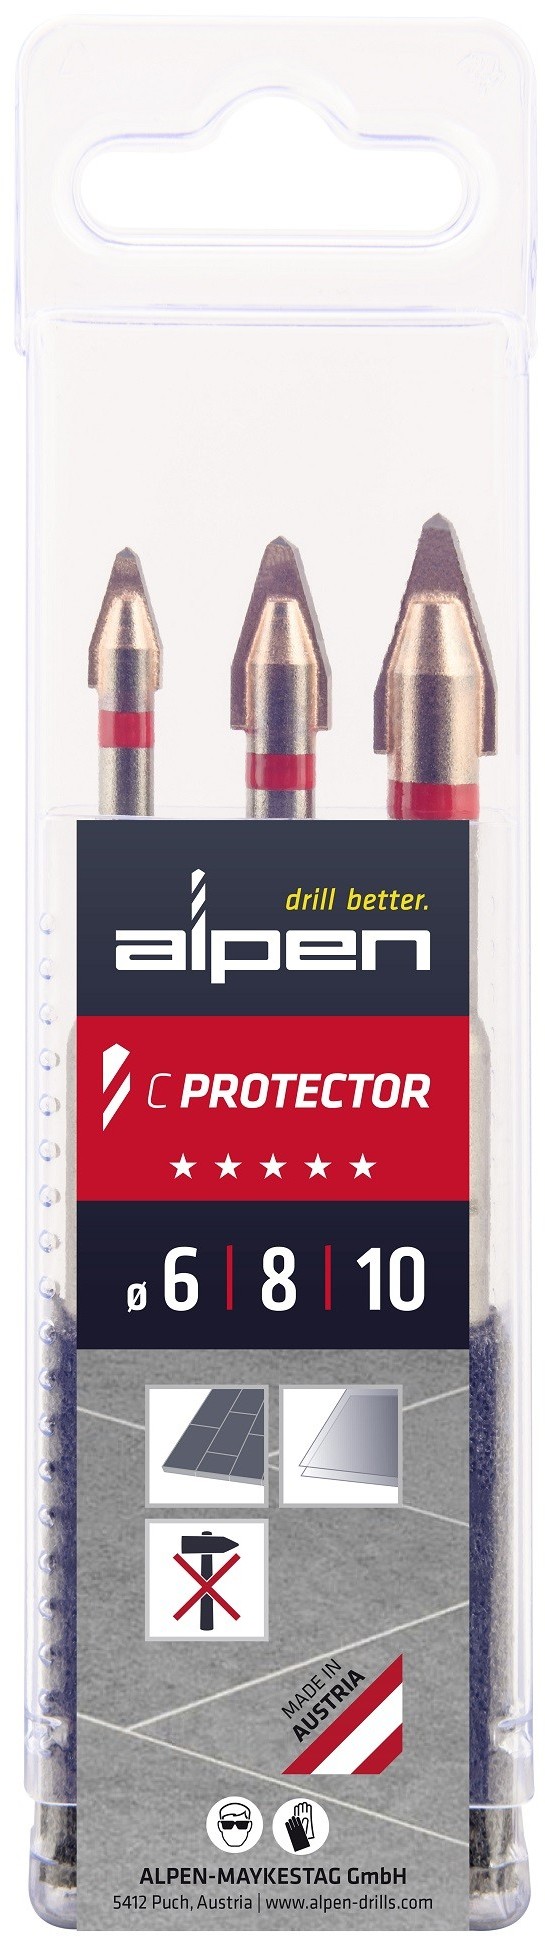 Alpen Zestaw 3szt Wierteł C Protector 6,8,10mm 0000303003100 25153